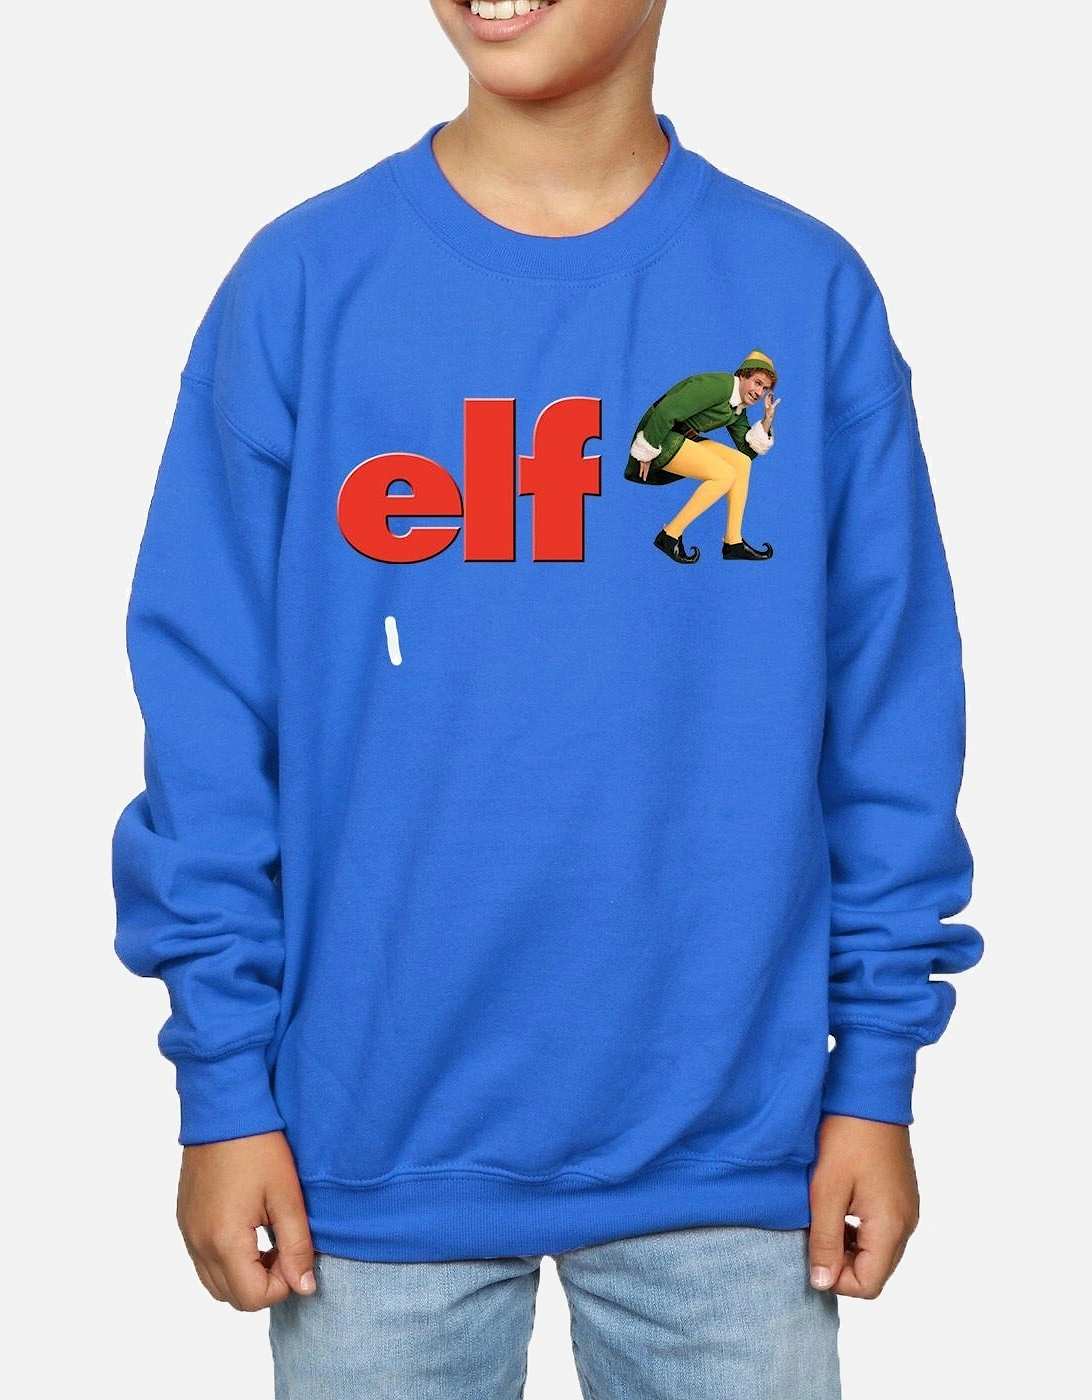 Boys Crouching Logo Sweatshirt